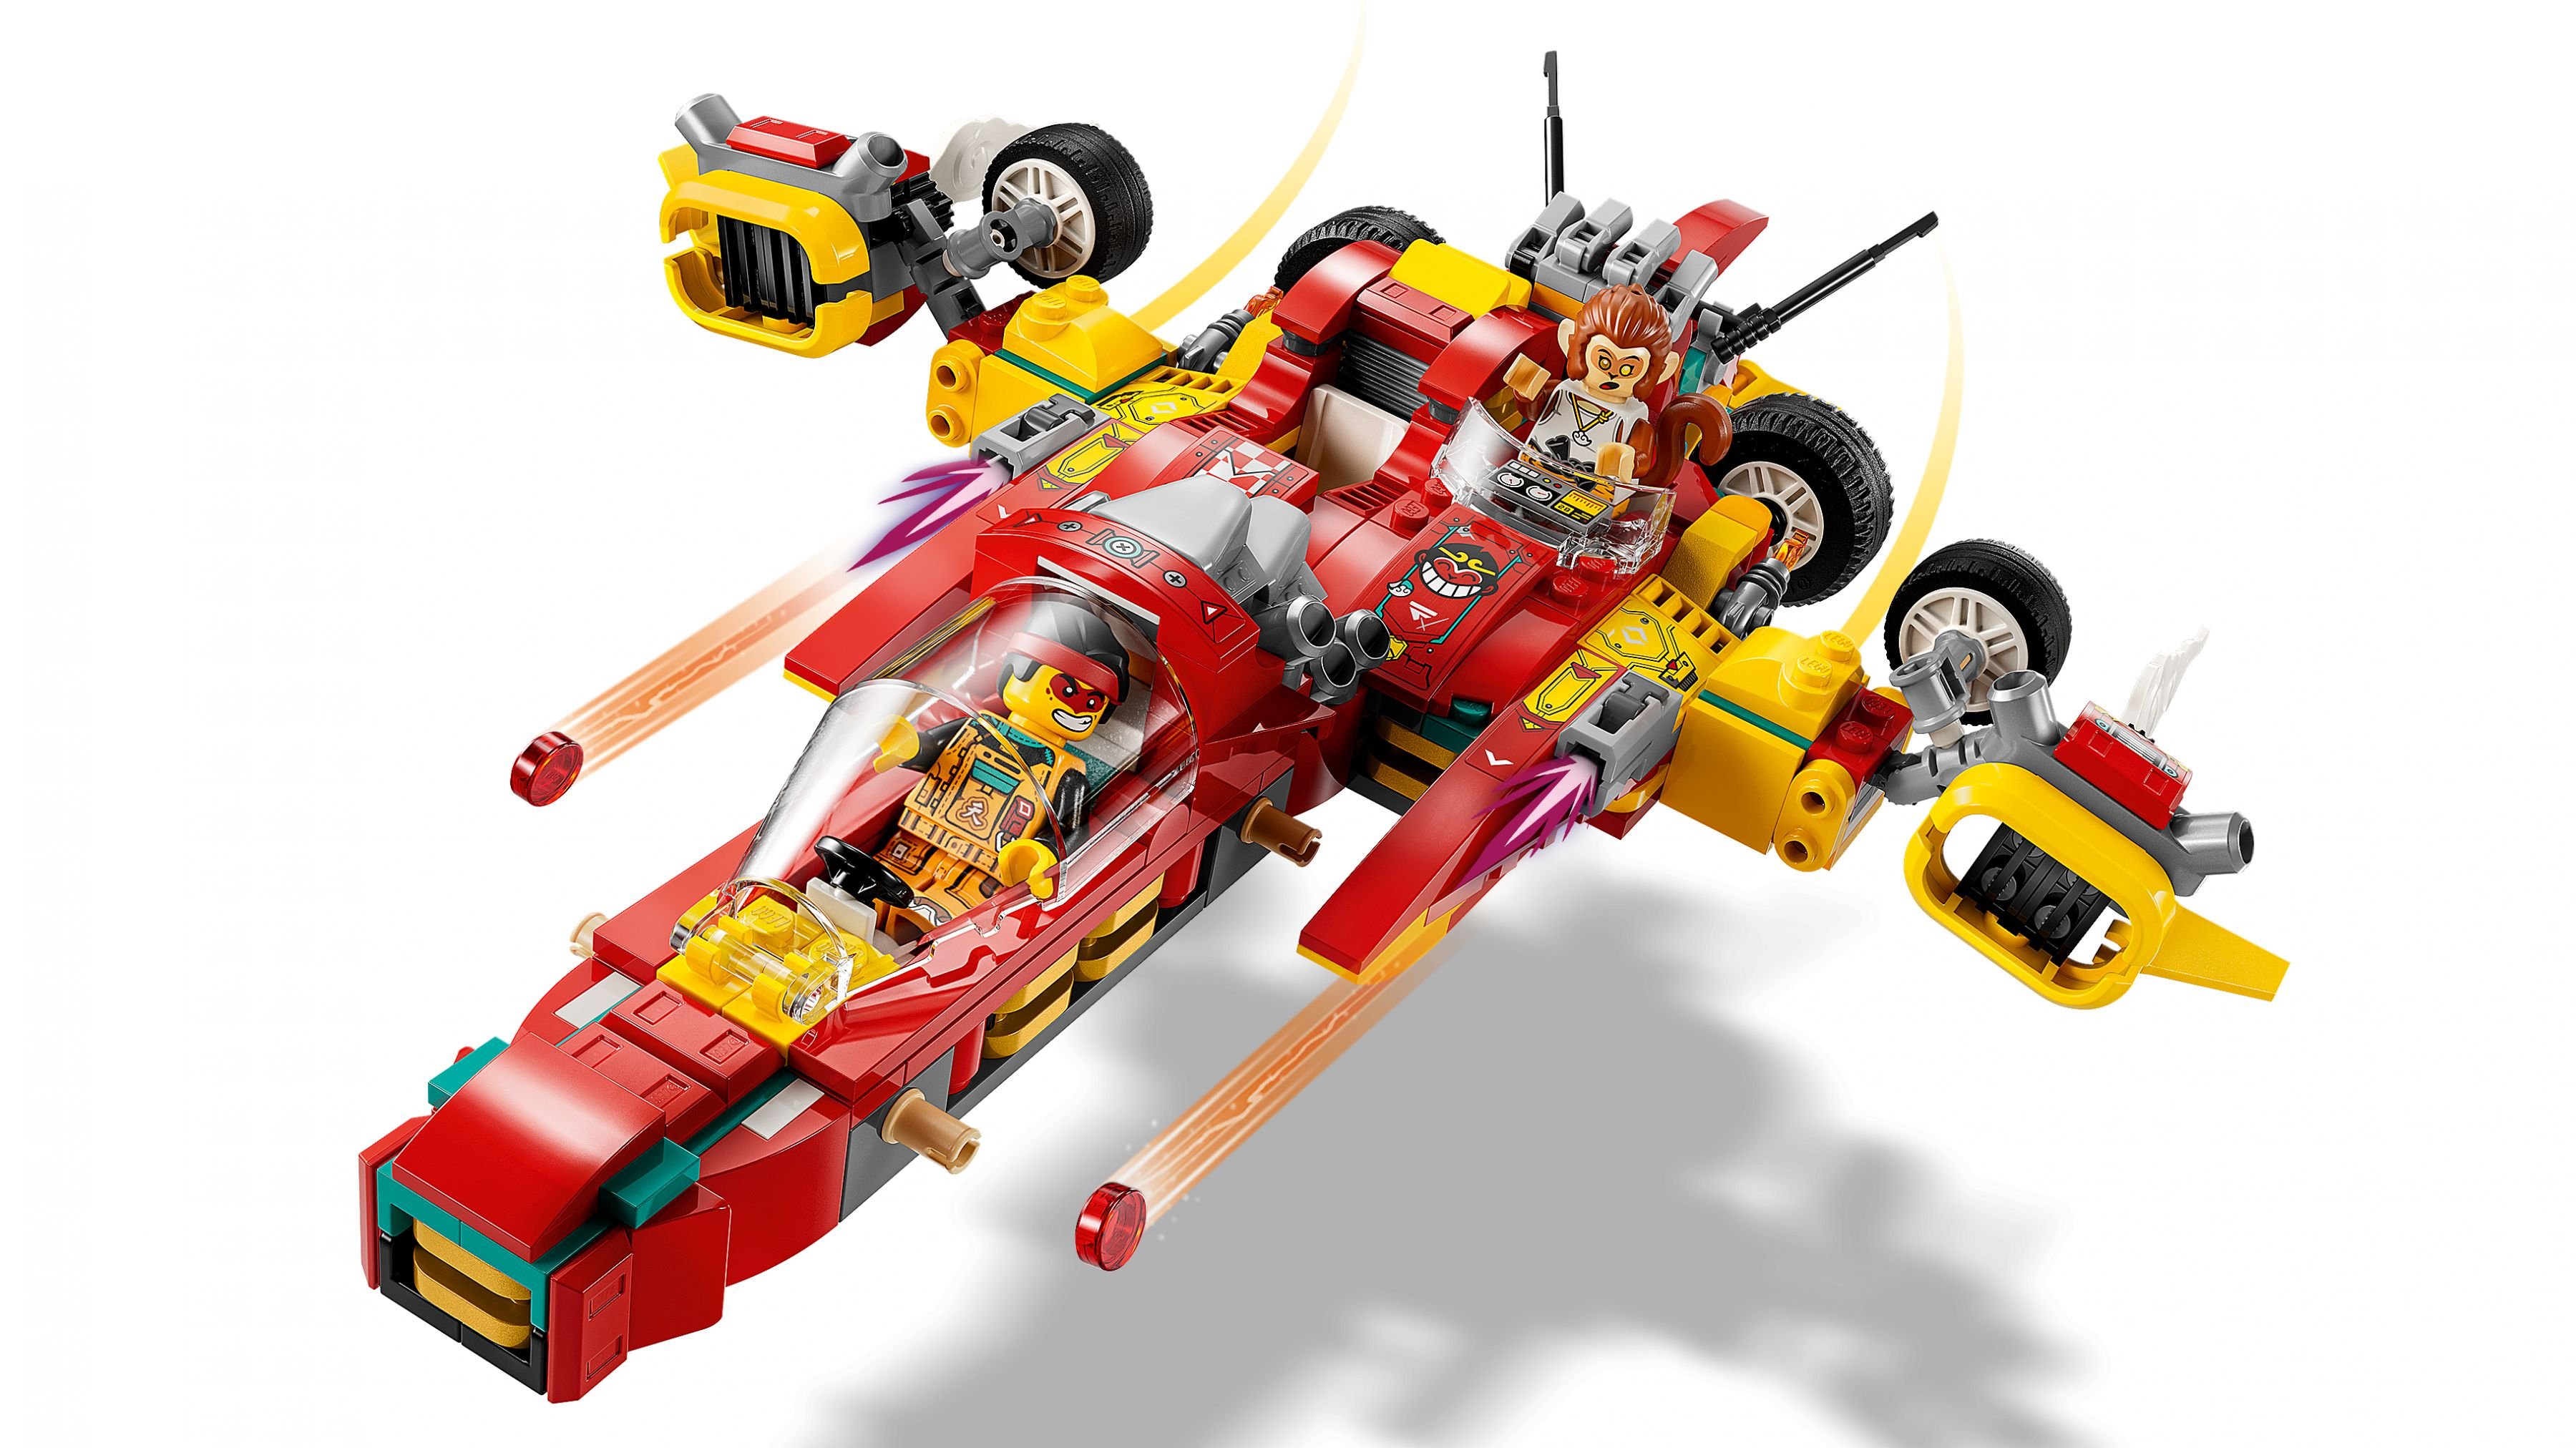 LEGO Monkie Kid 80050 Kreative Fahrzeuge LEGO_80050_web_sec02_nobg.jpg